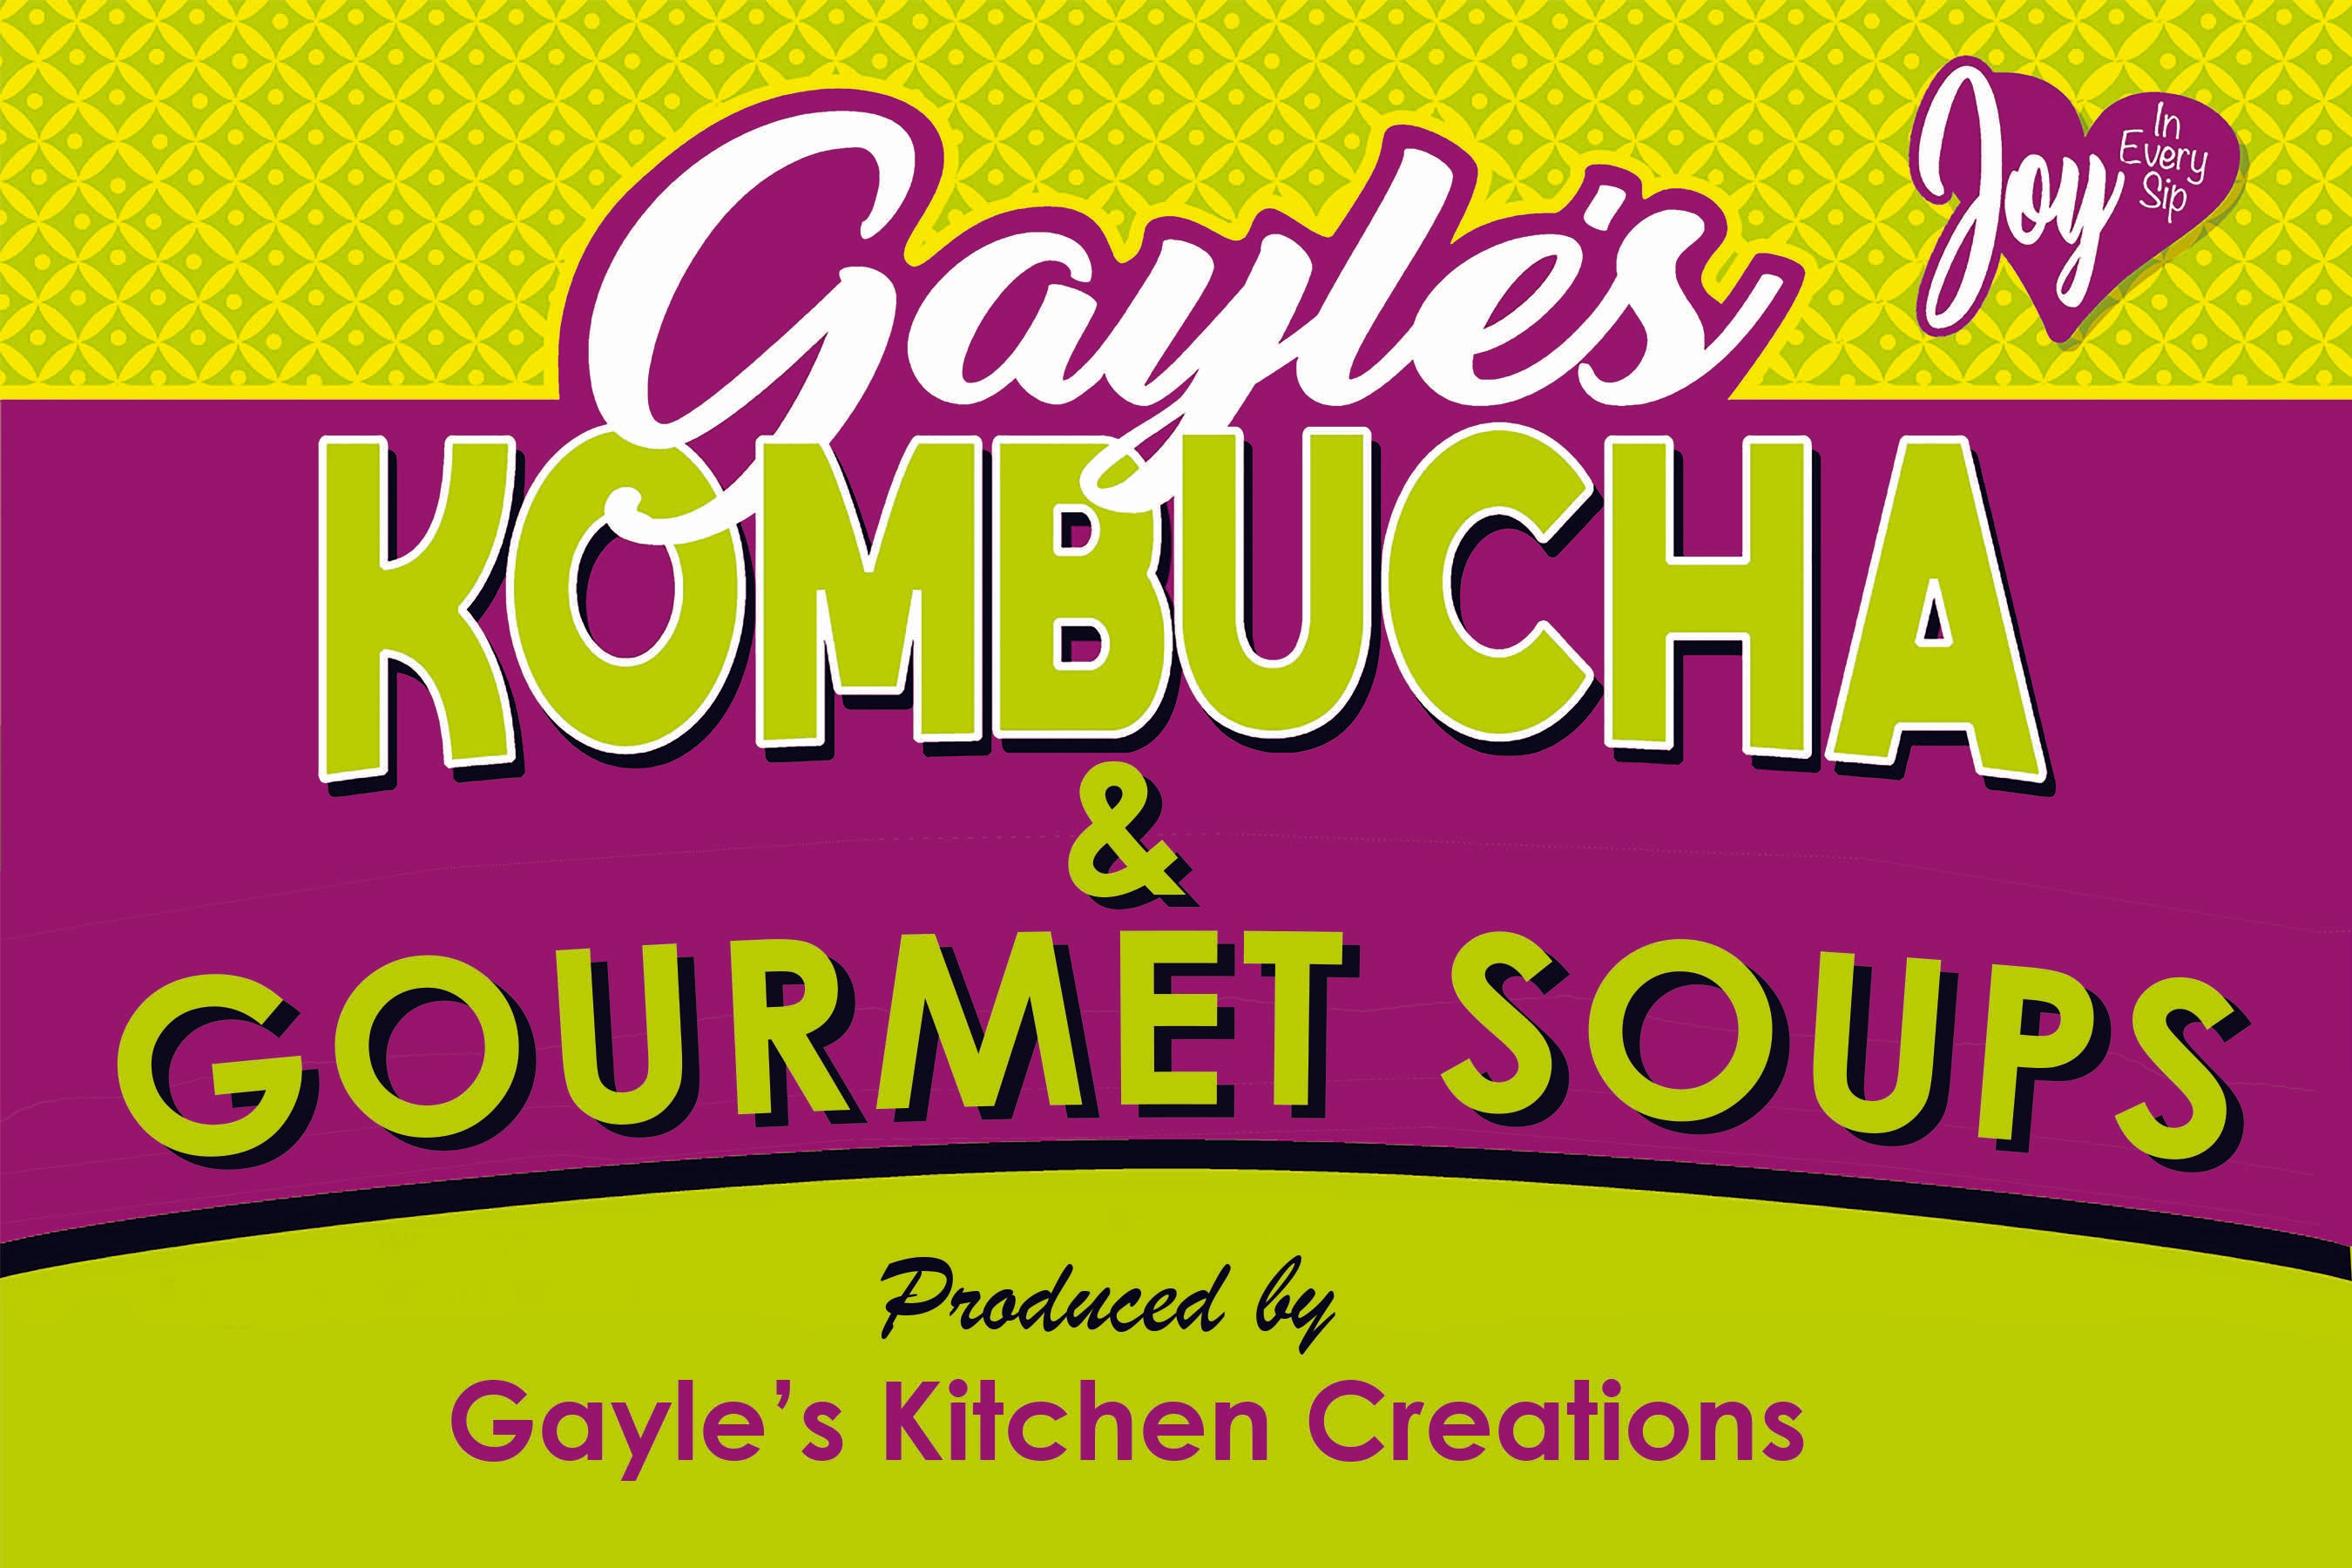 Gayle's Kitchen Creations